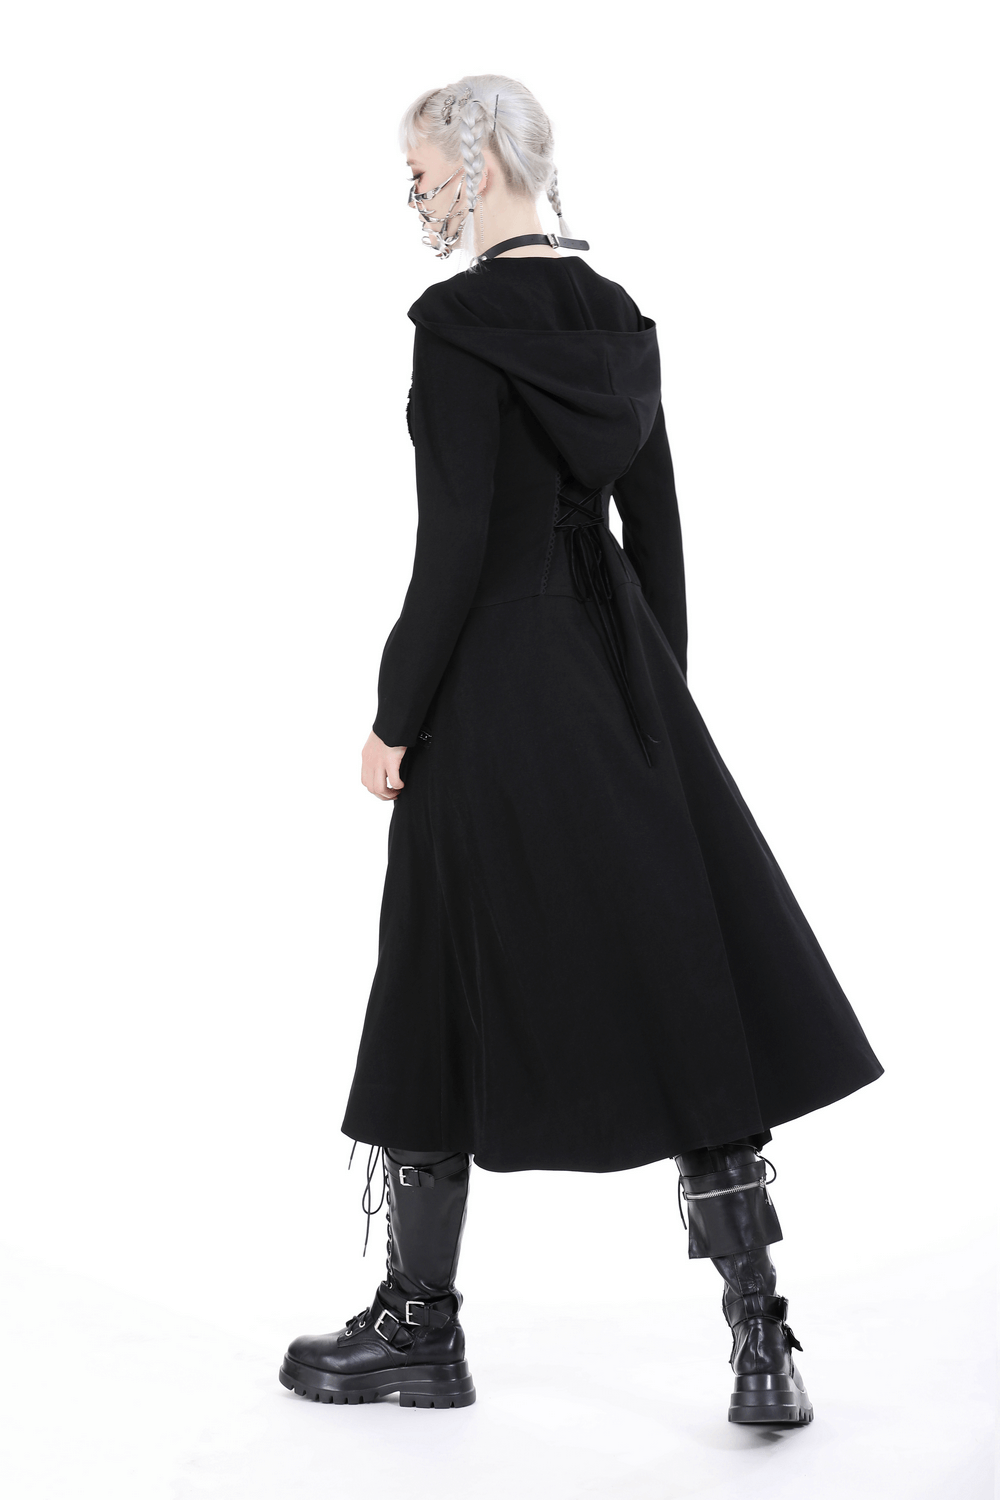 Elegant Gothic Hooded Coat with Lace Detailing